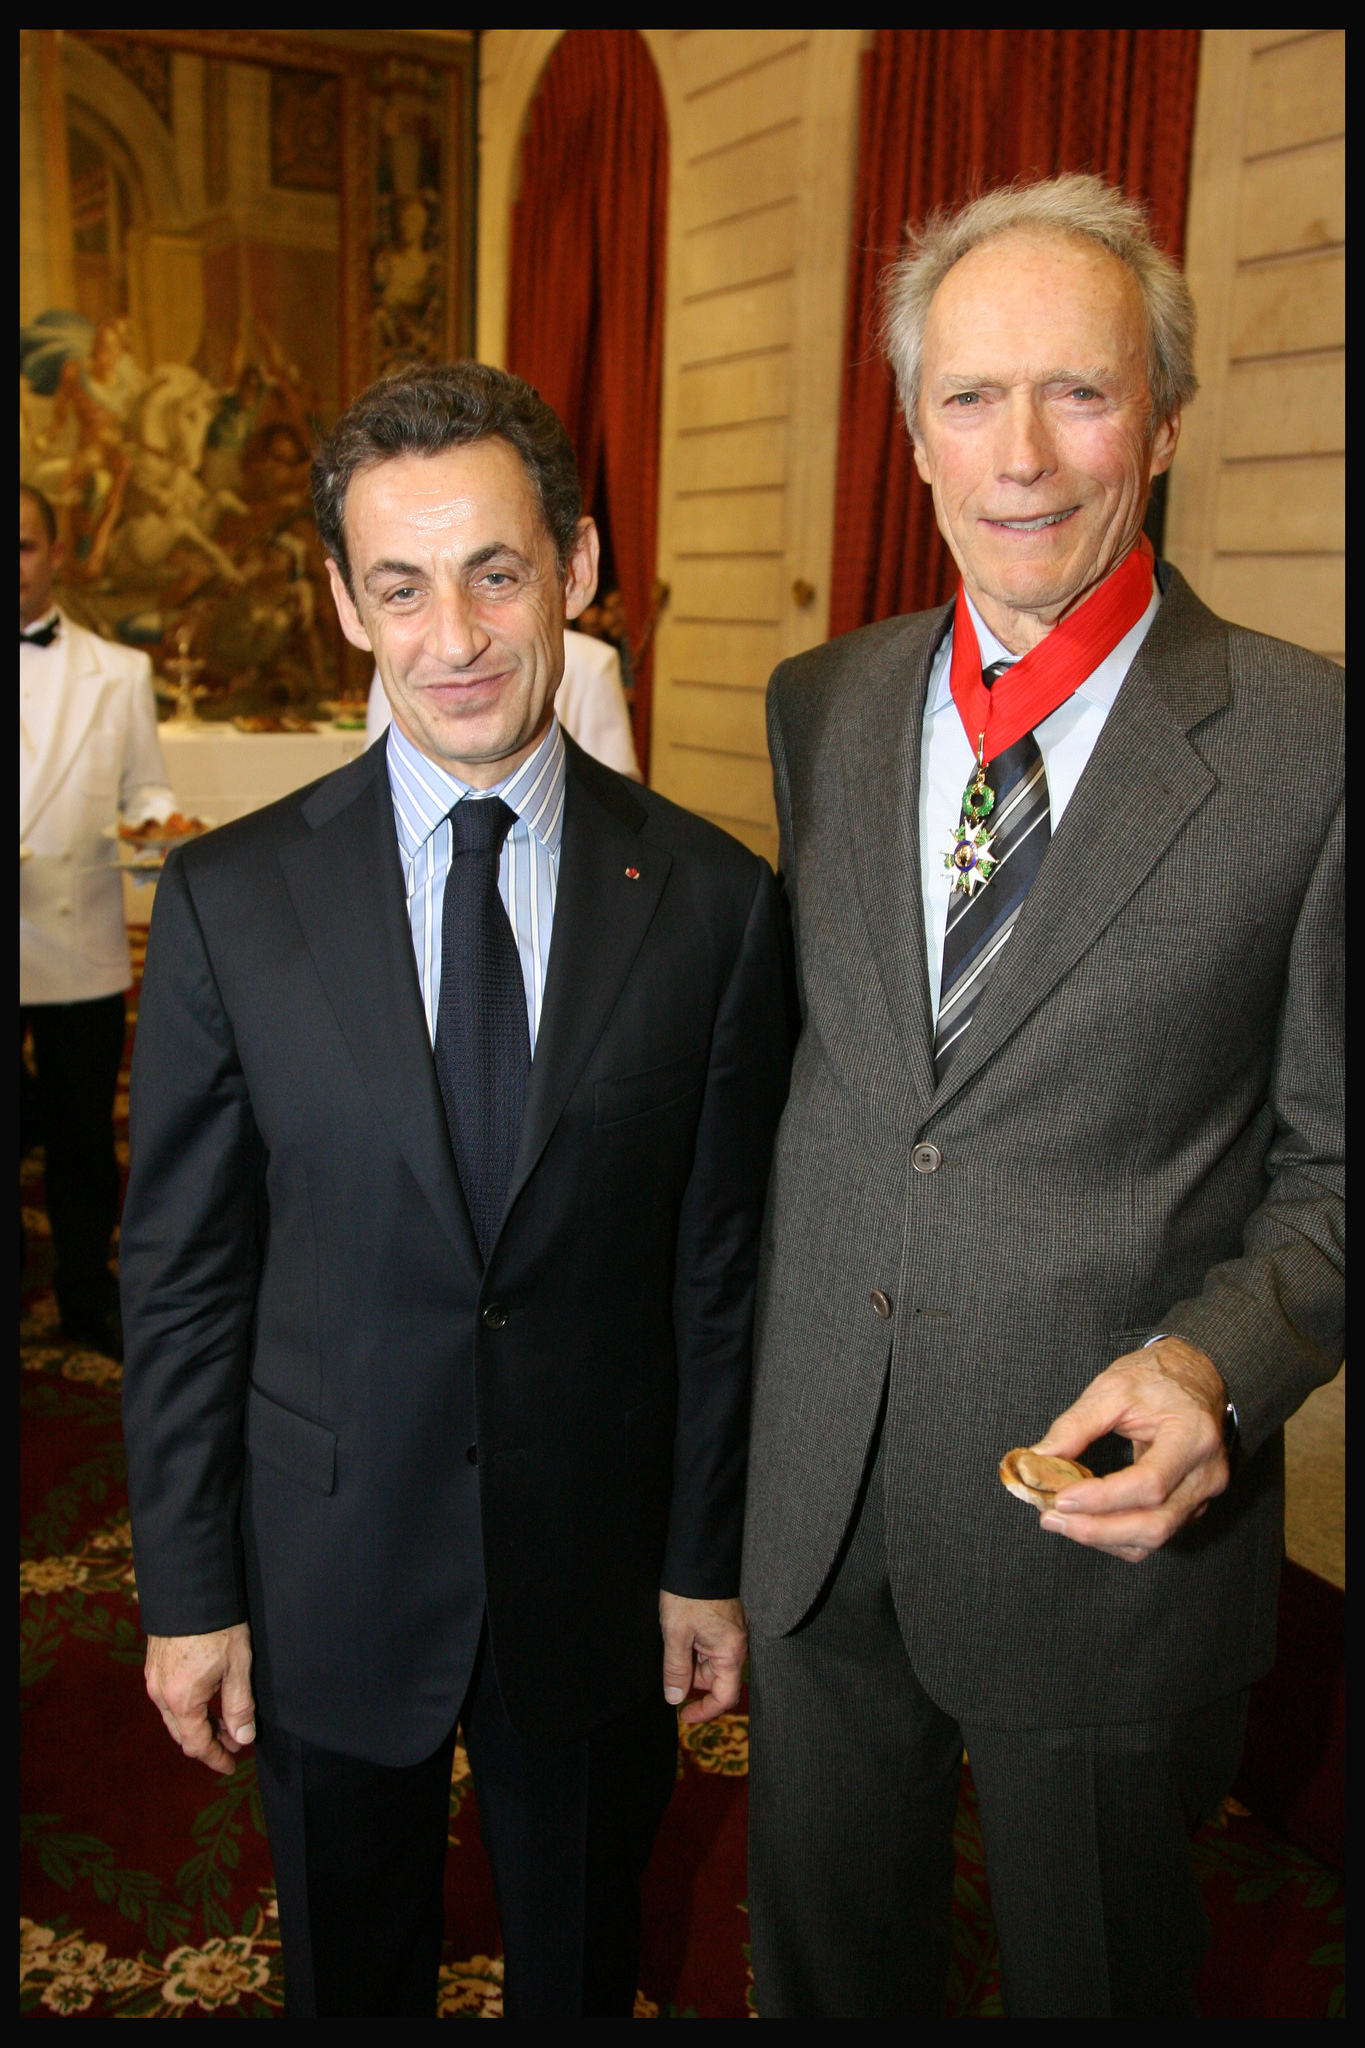 Clint Eastwood and Nicolas Sarkozy